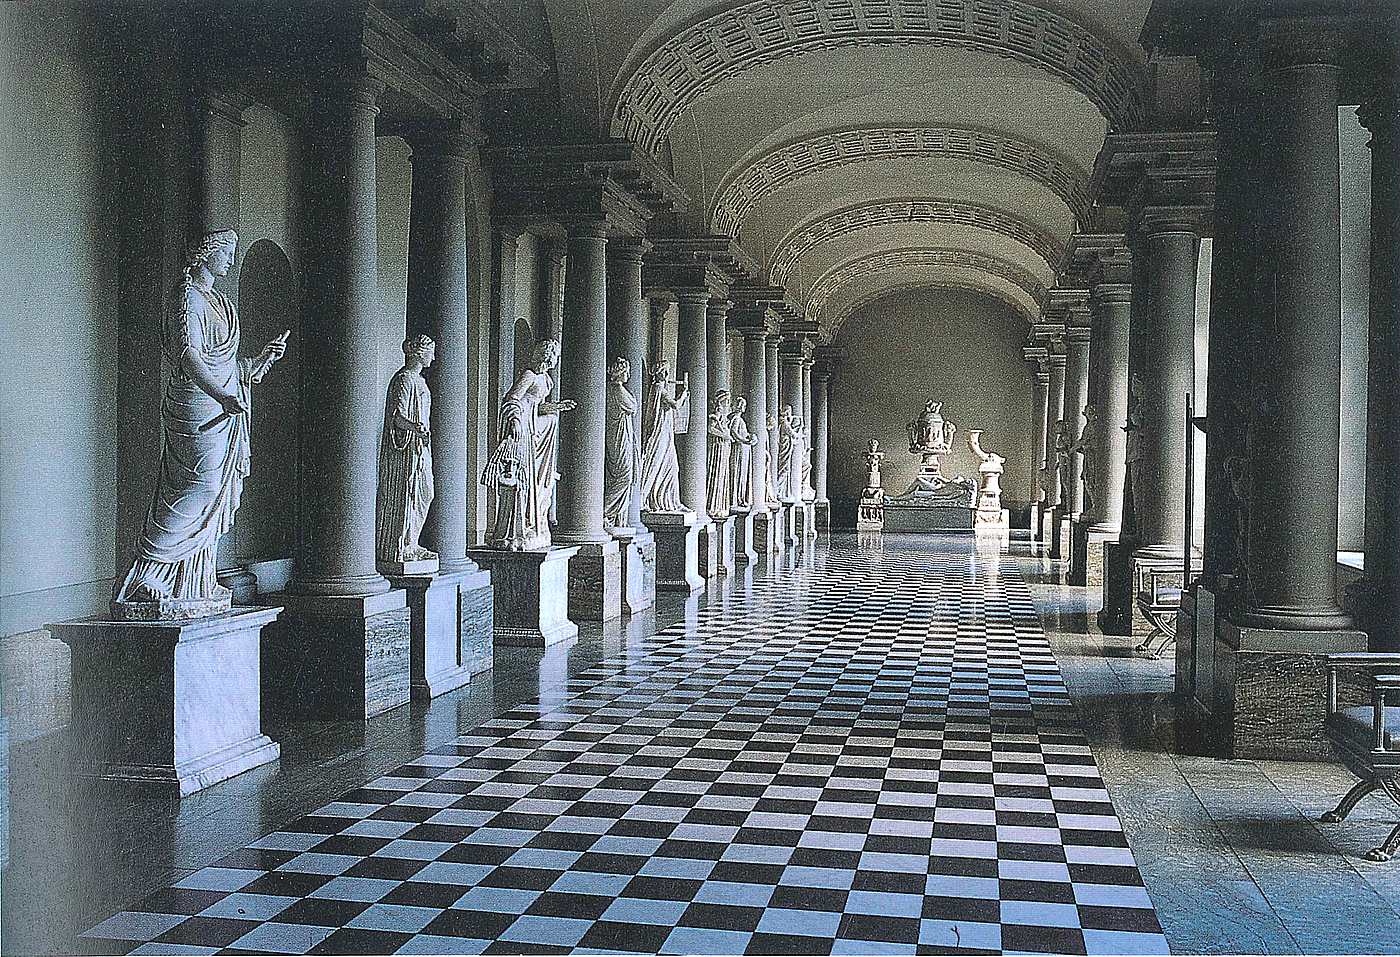 Store galleriet i Kongl. Museum/Gustav III's Antikmuseum efter rekonstruktionen 1992